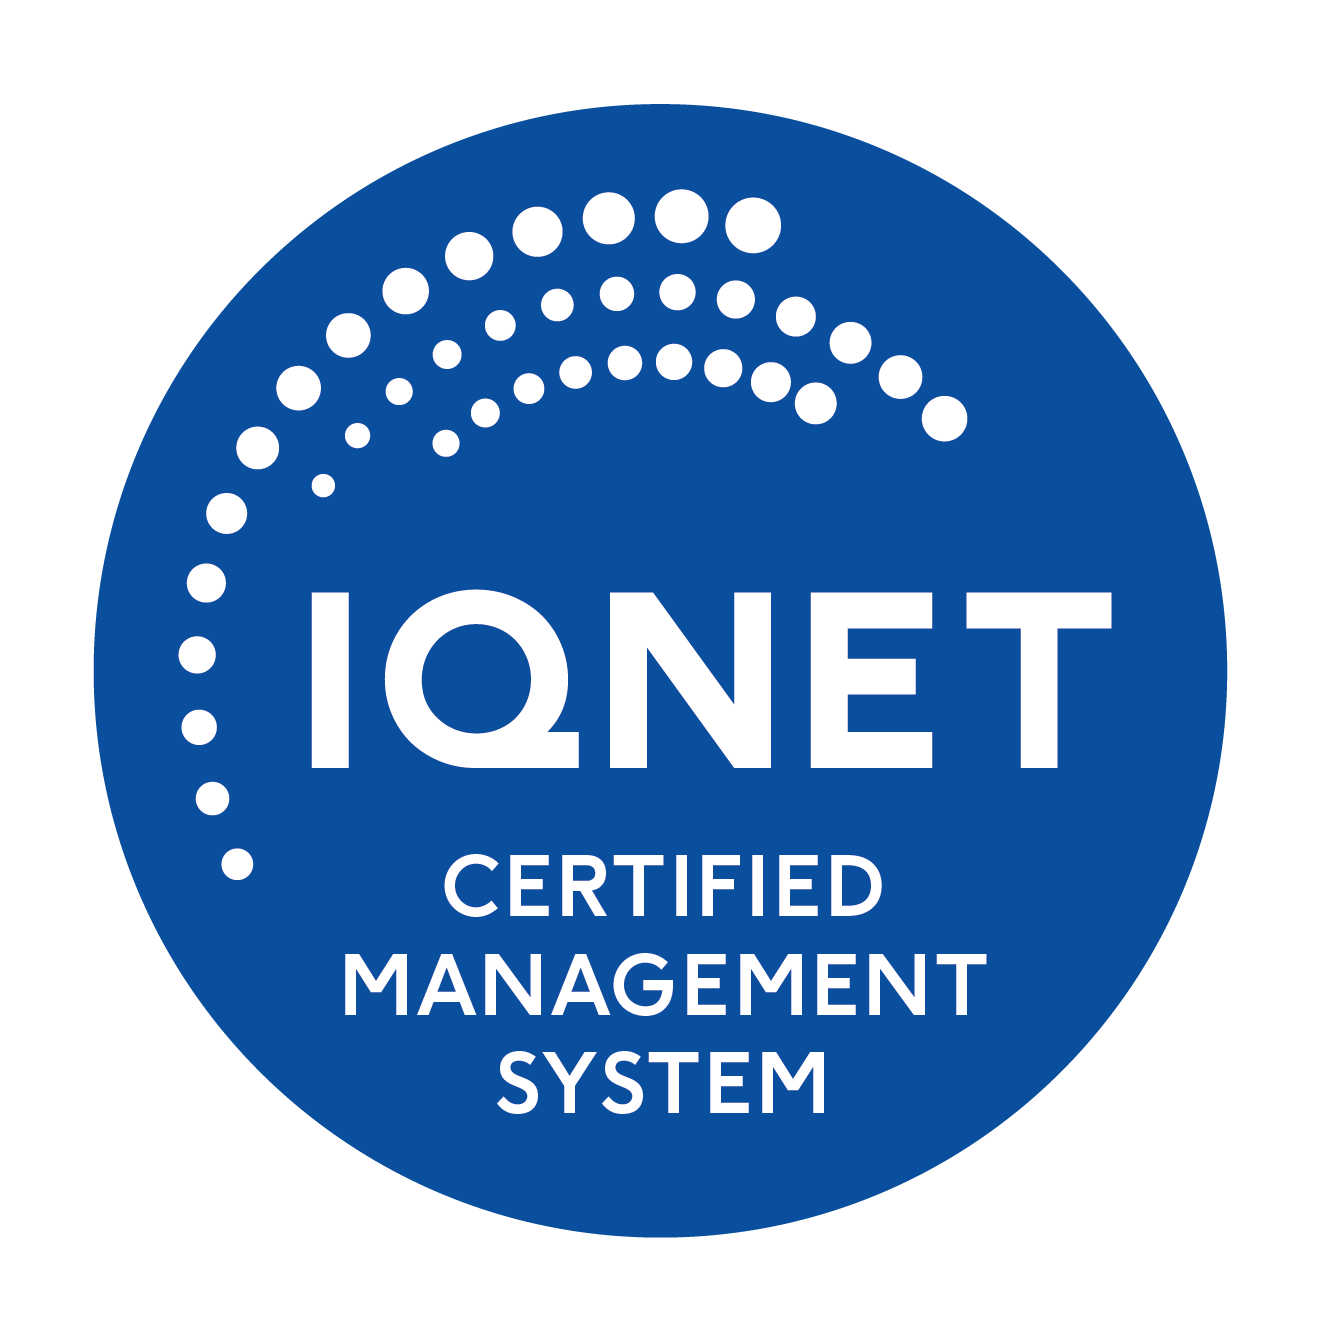 Certificado IQNET and ICONTEC